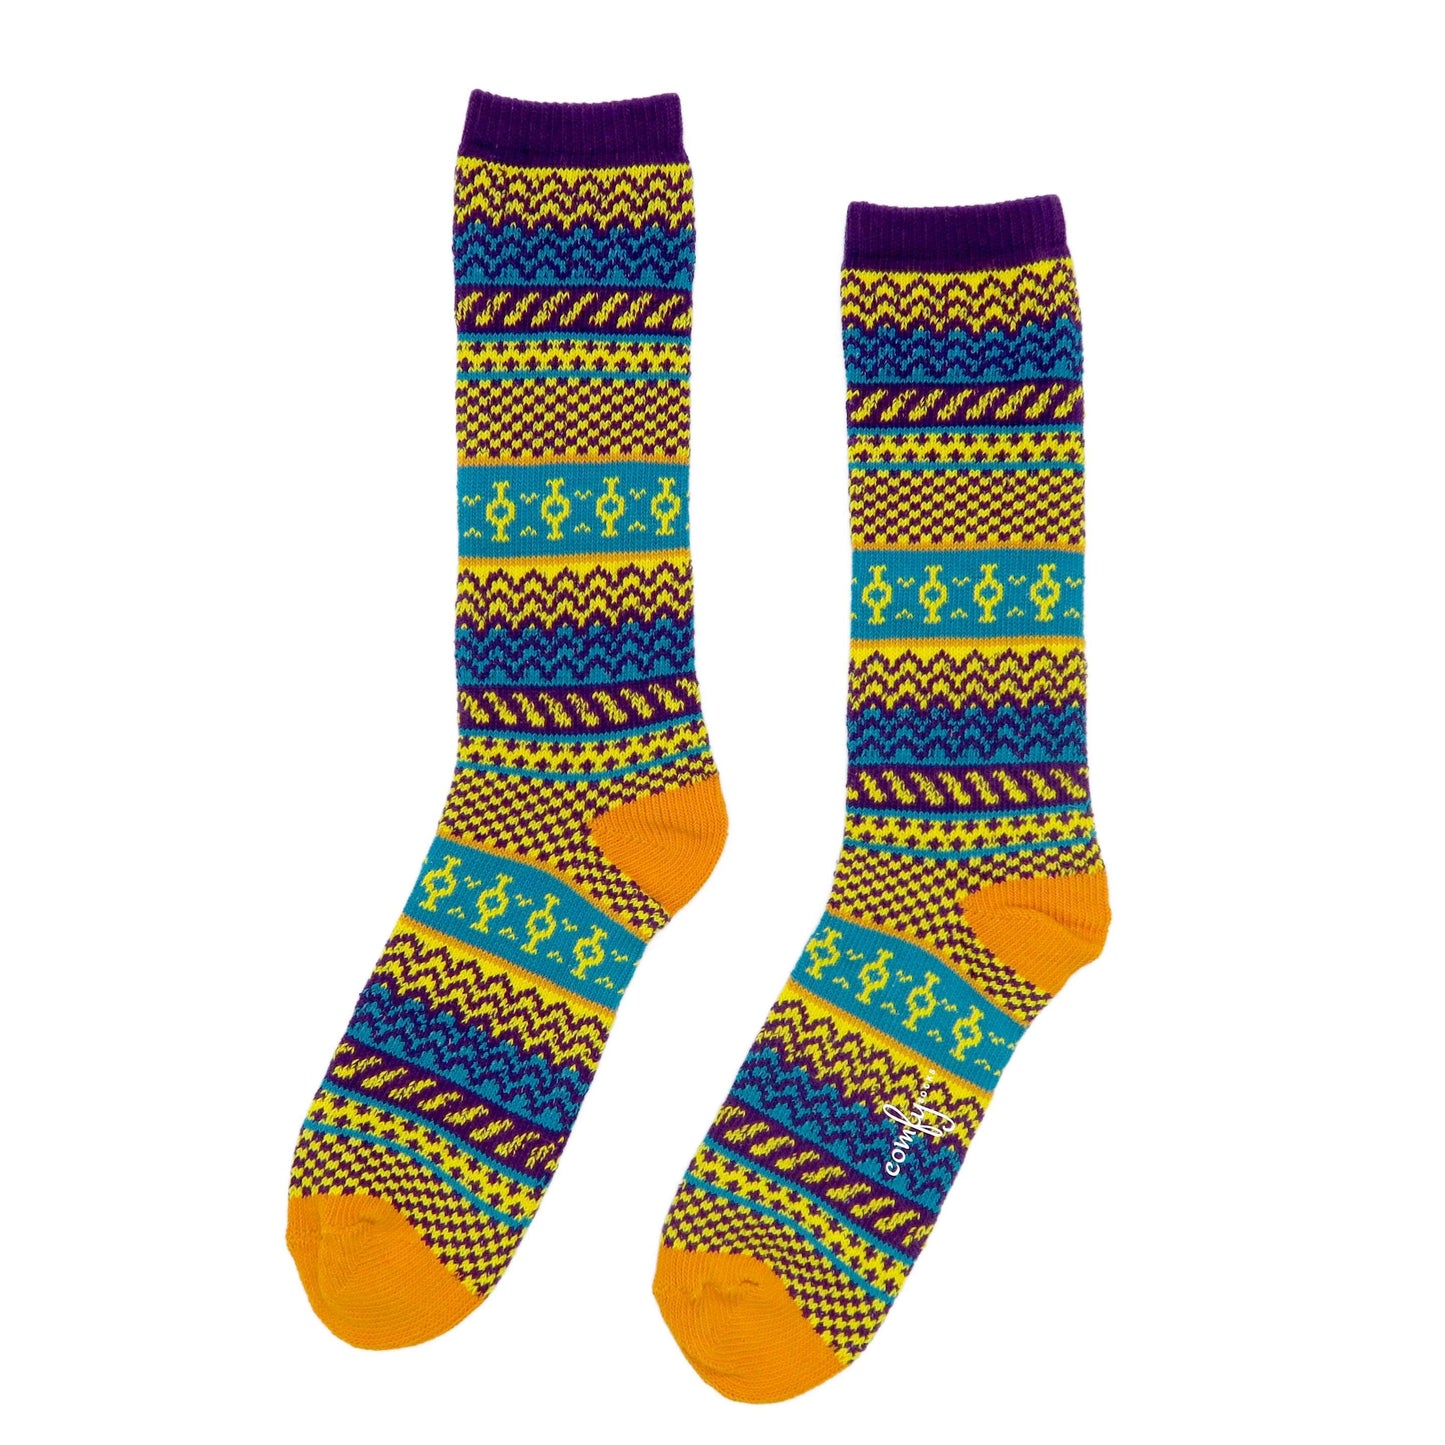 murasaki tribal sock - orange and purple tribal sock